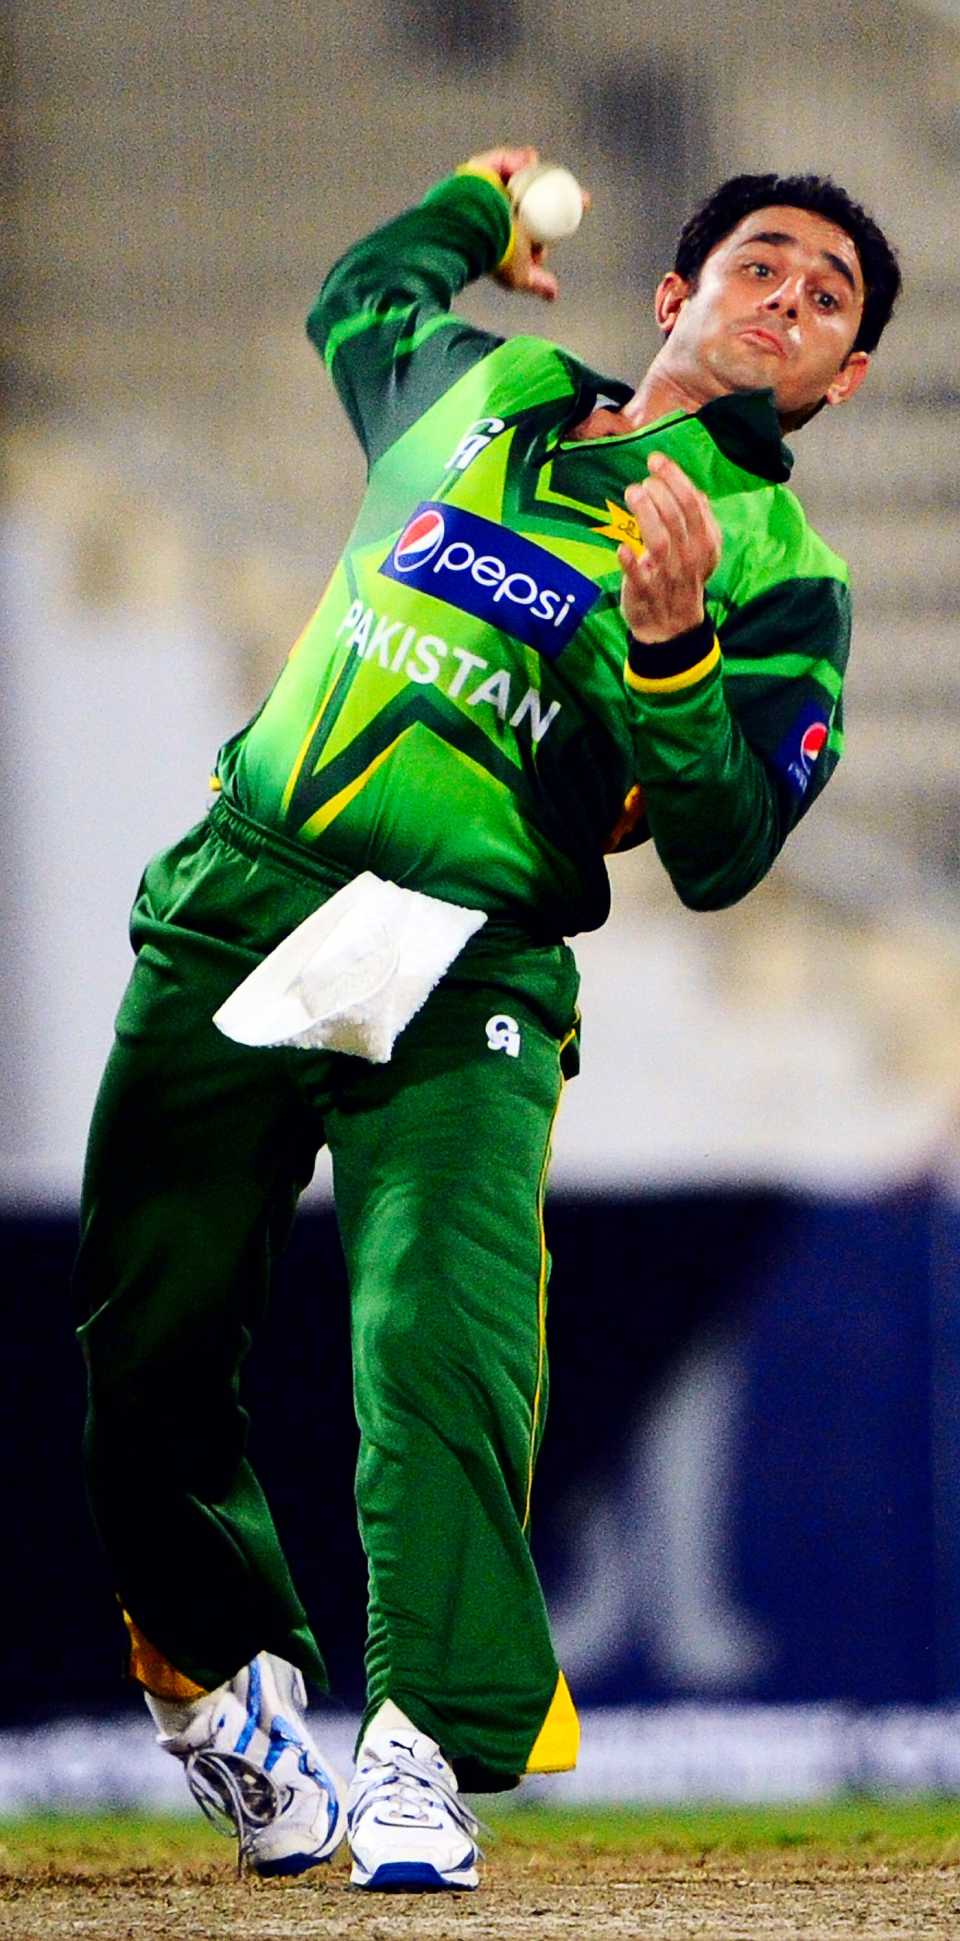 Saeed Ajmal bowls, Pakistan v Australia, 3rd ODI, Sharjah, September 3, 2012